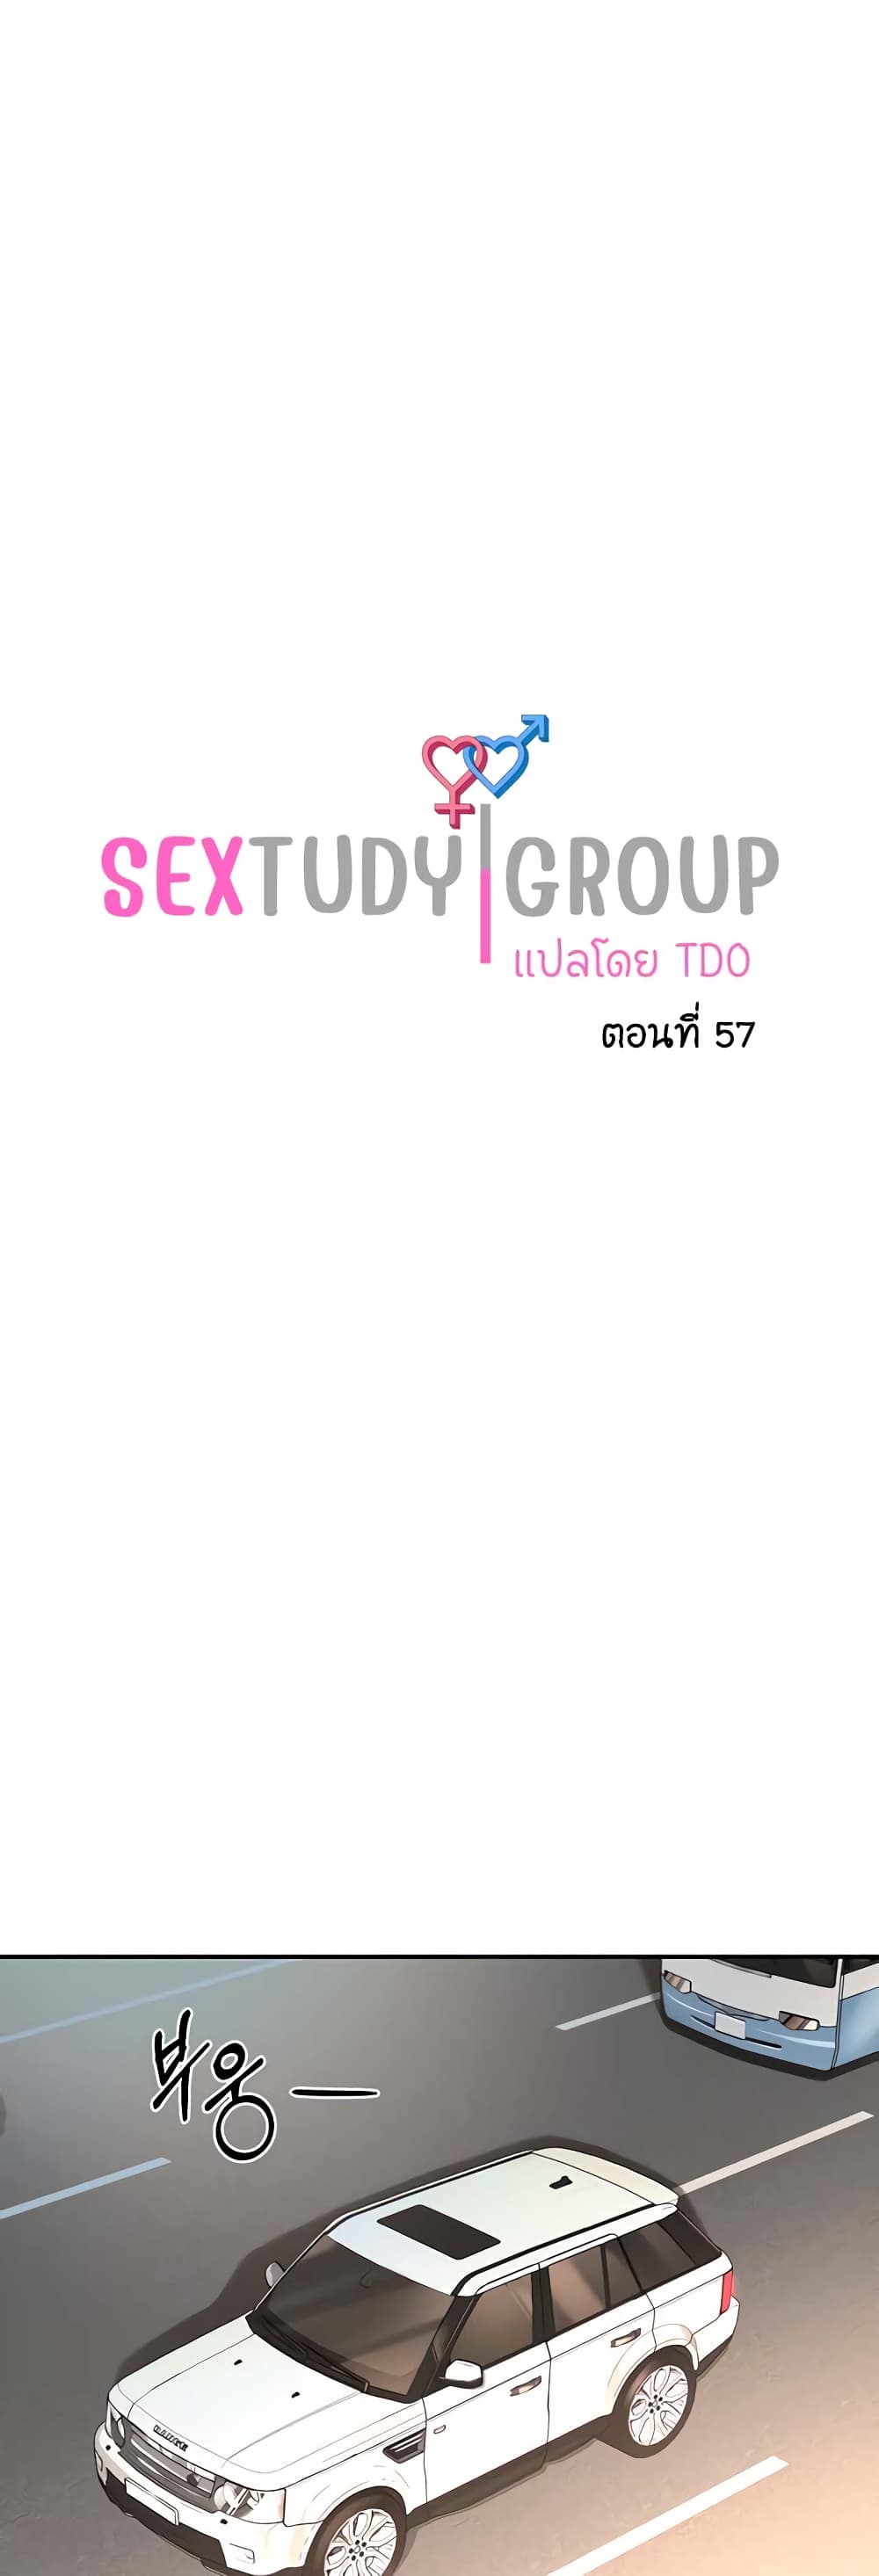 Sextudy Group 57 (1)